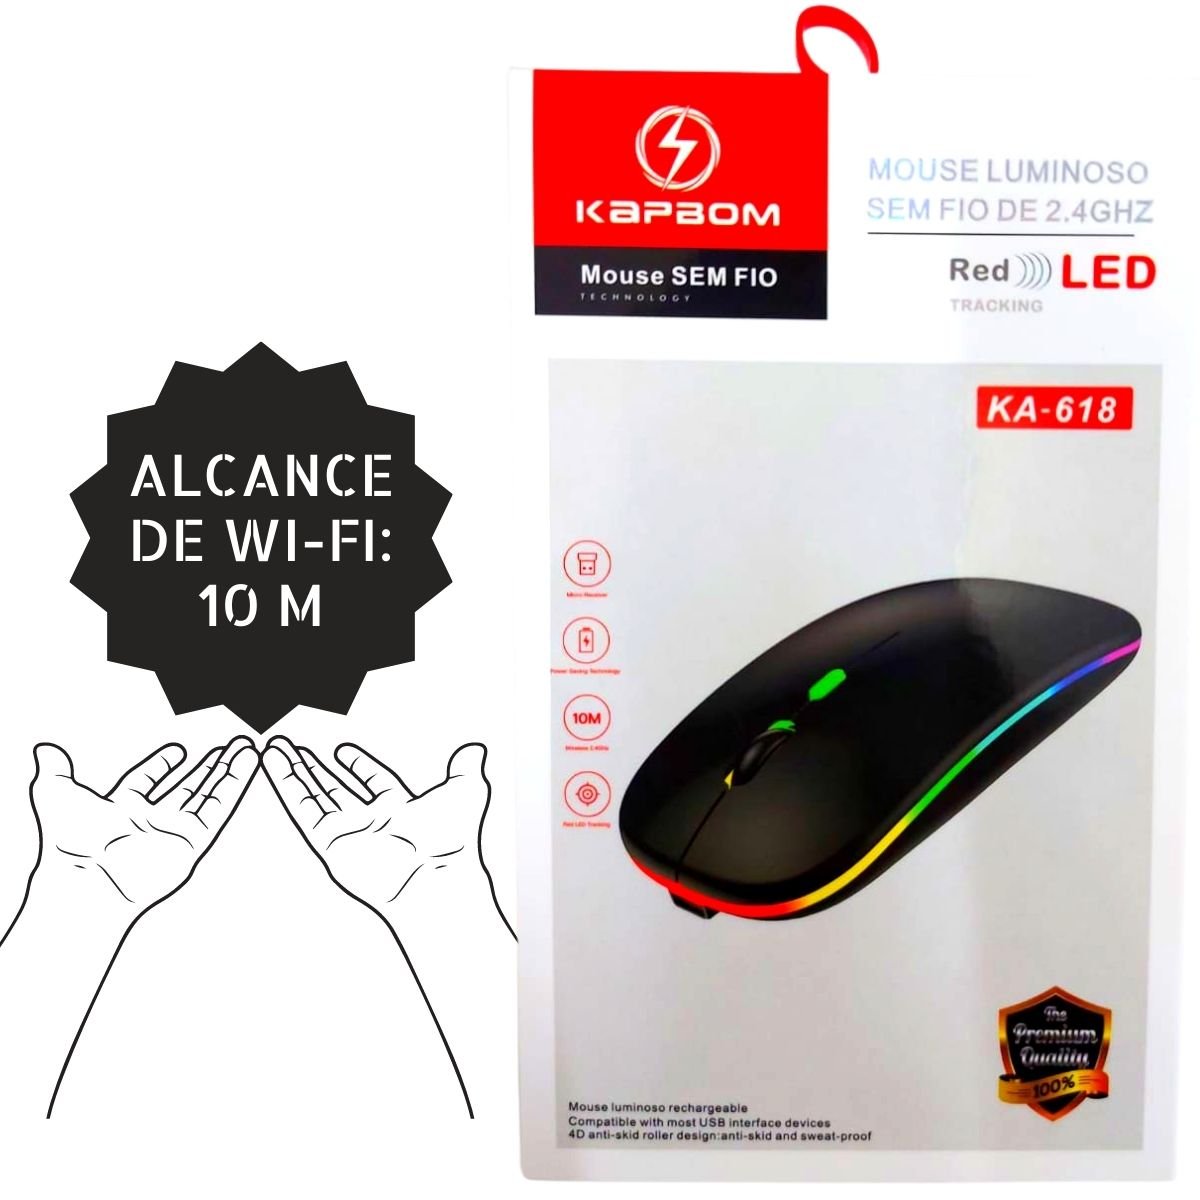 Mouse Silencioso Sem Fio Recarregável Luminoso Led RGB Kapbom KA-618 Silencioso Sem Fio Recarregavel - 9